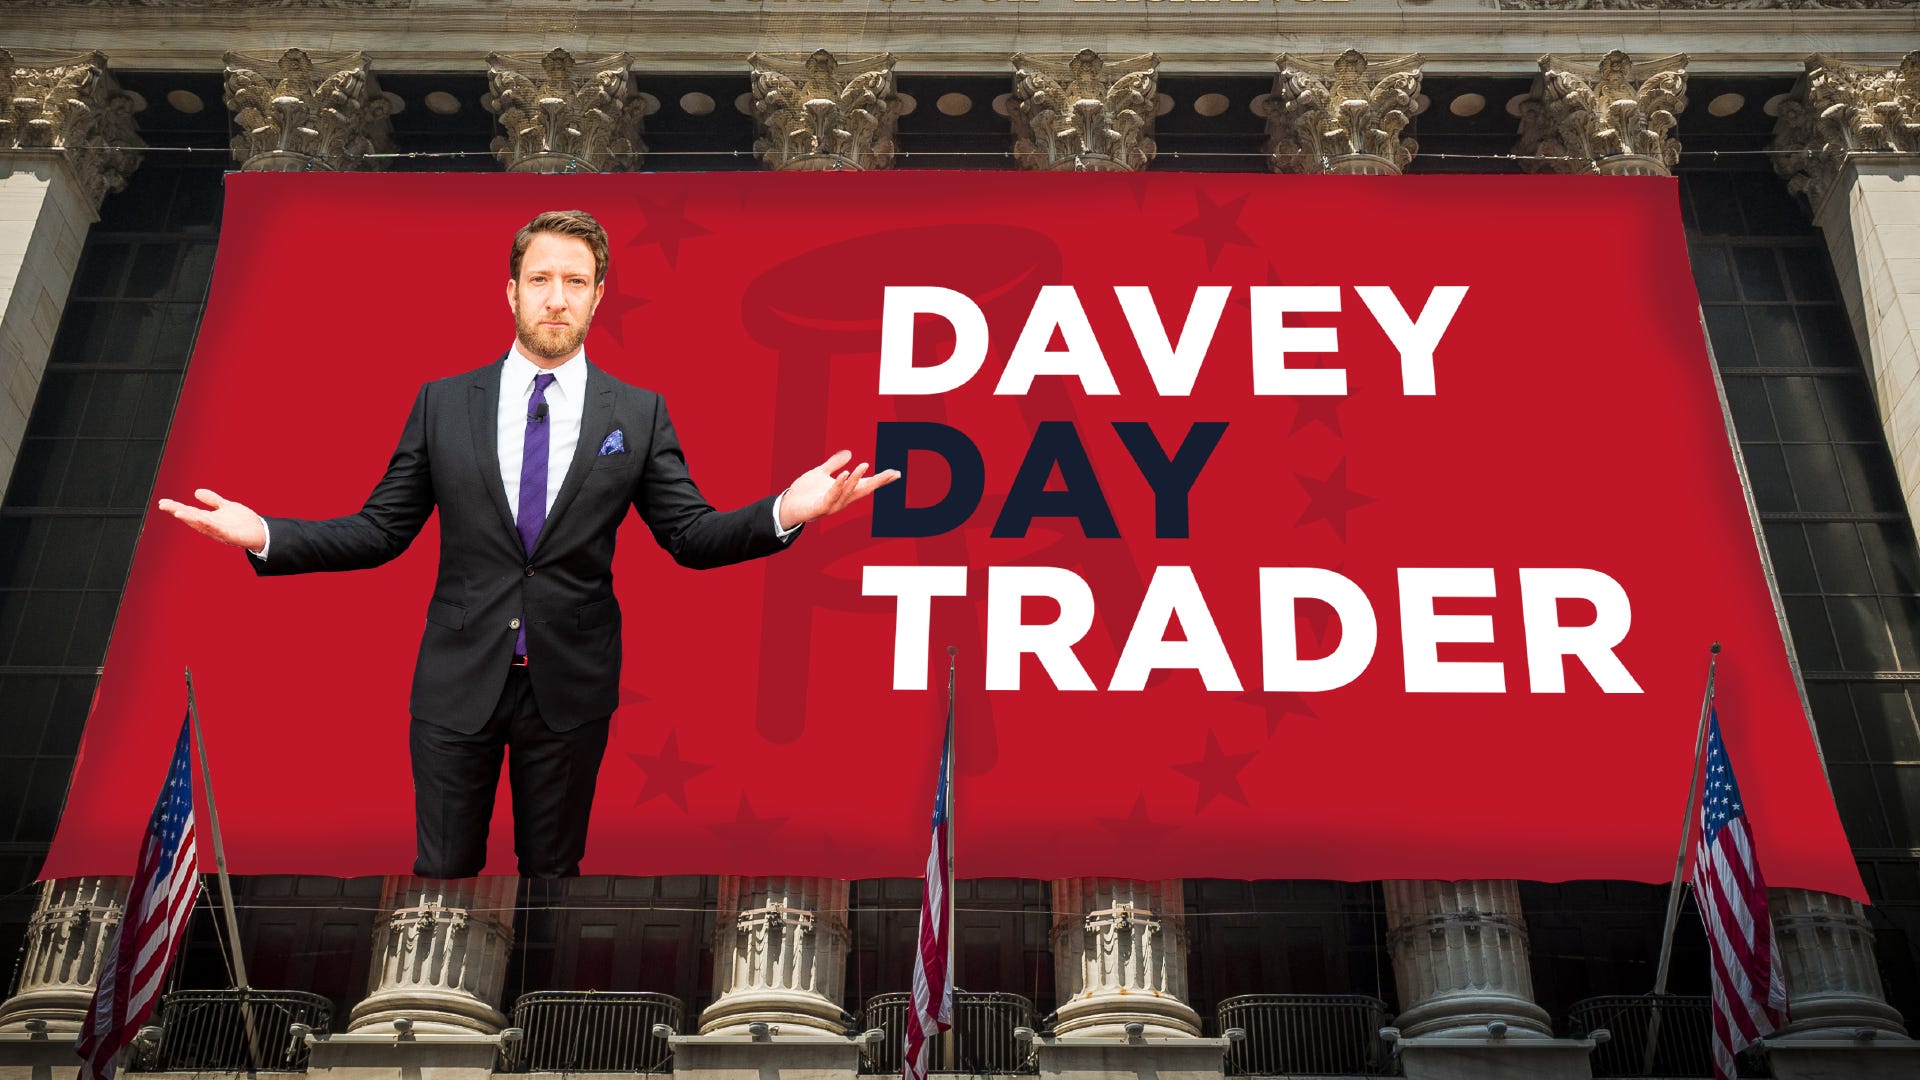 Davey Day Trader – March 31st, 2020